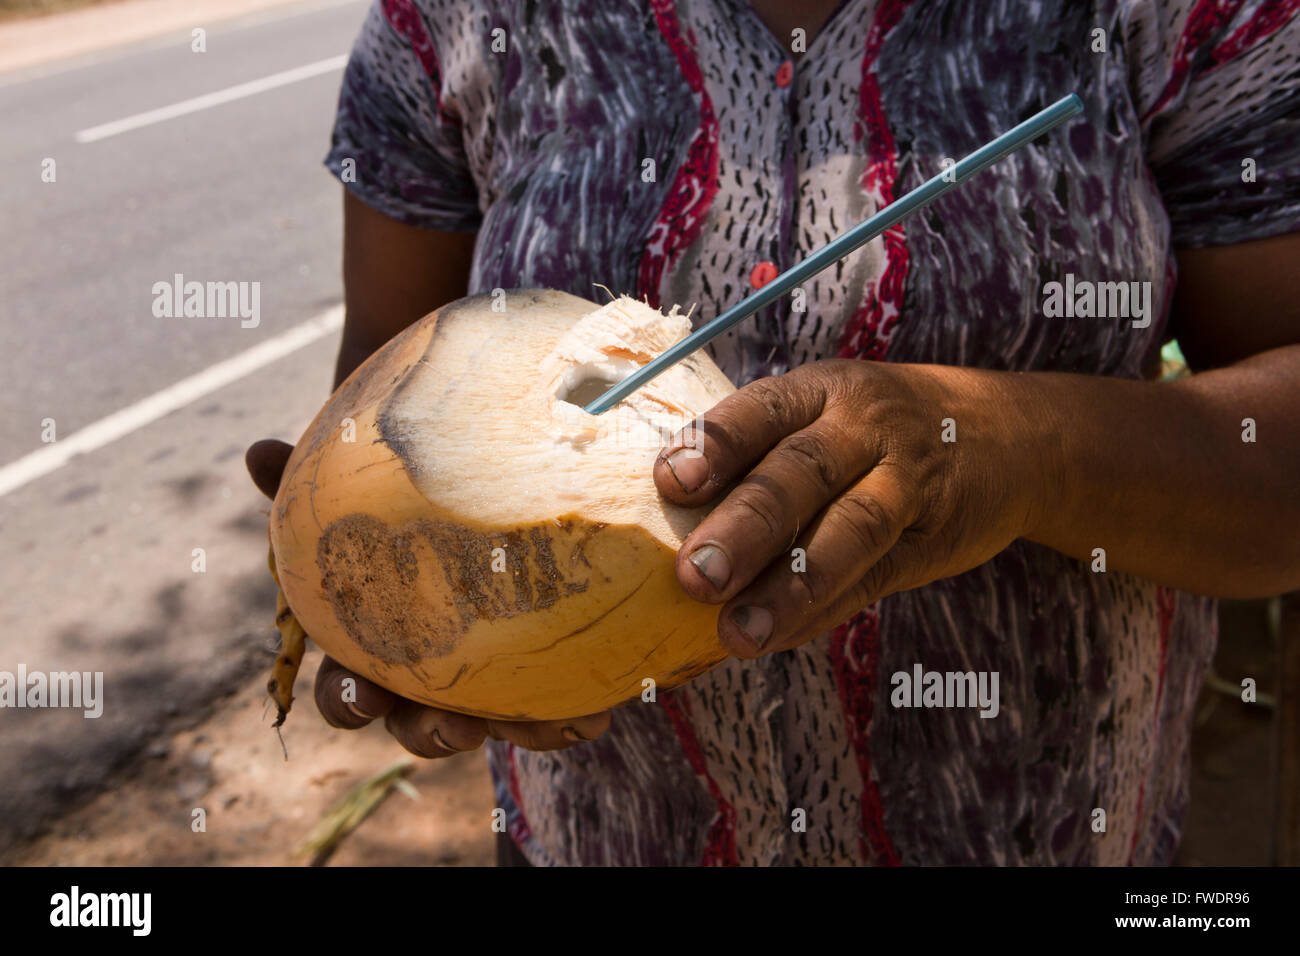 Sri Lanka, Dambulla, woman offering thambili King Coconut to drink at roadside stall Stock Photo